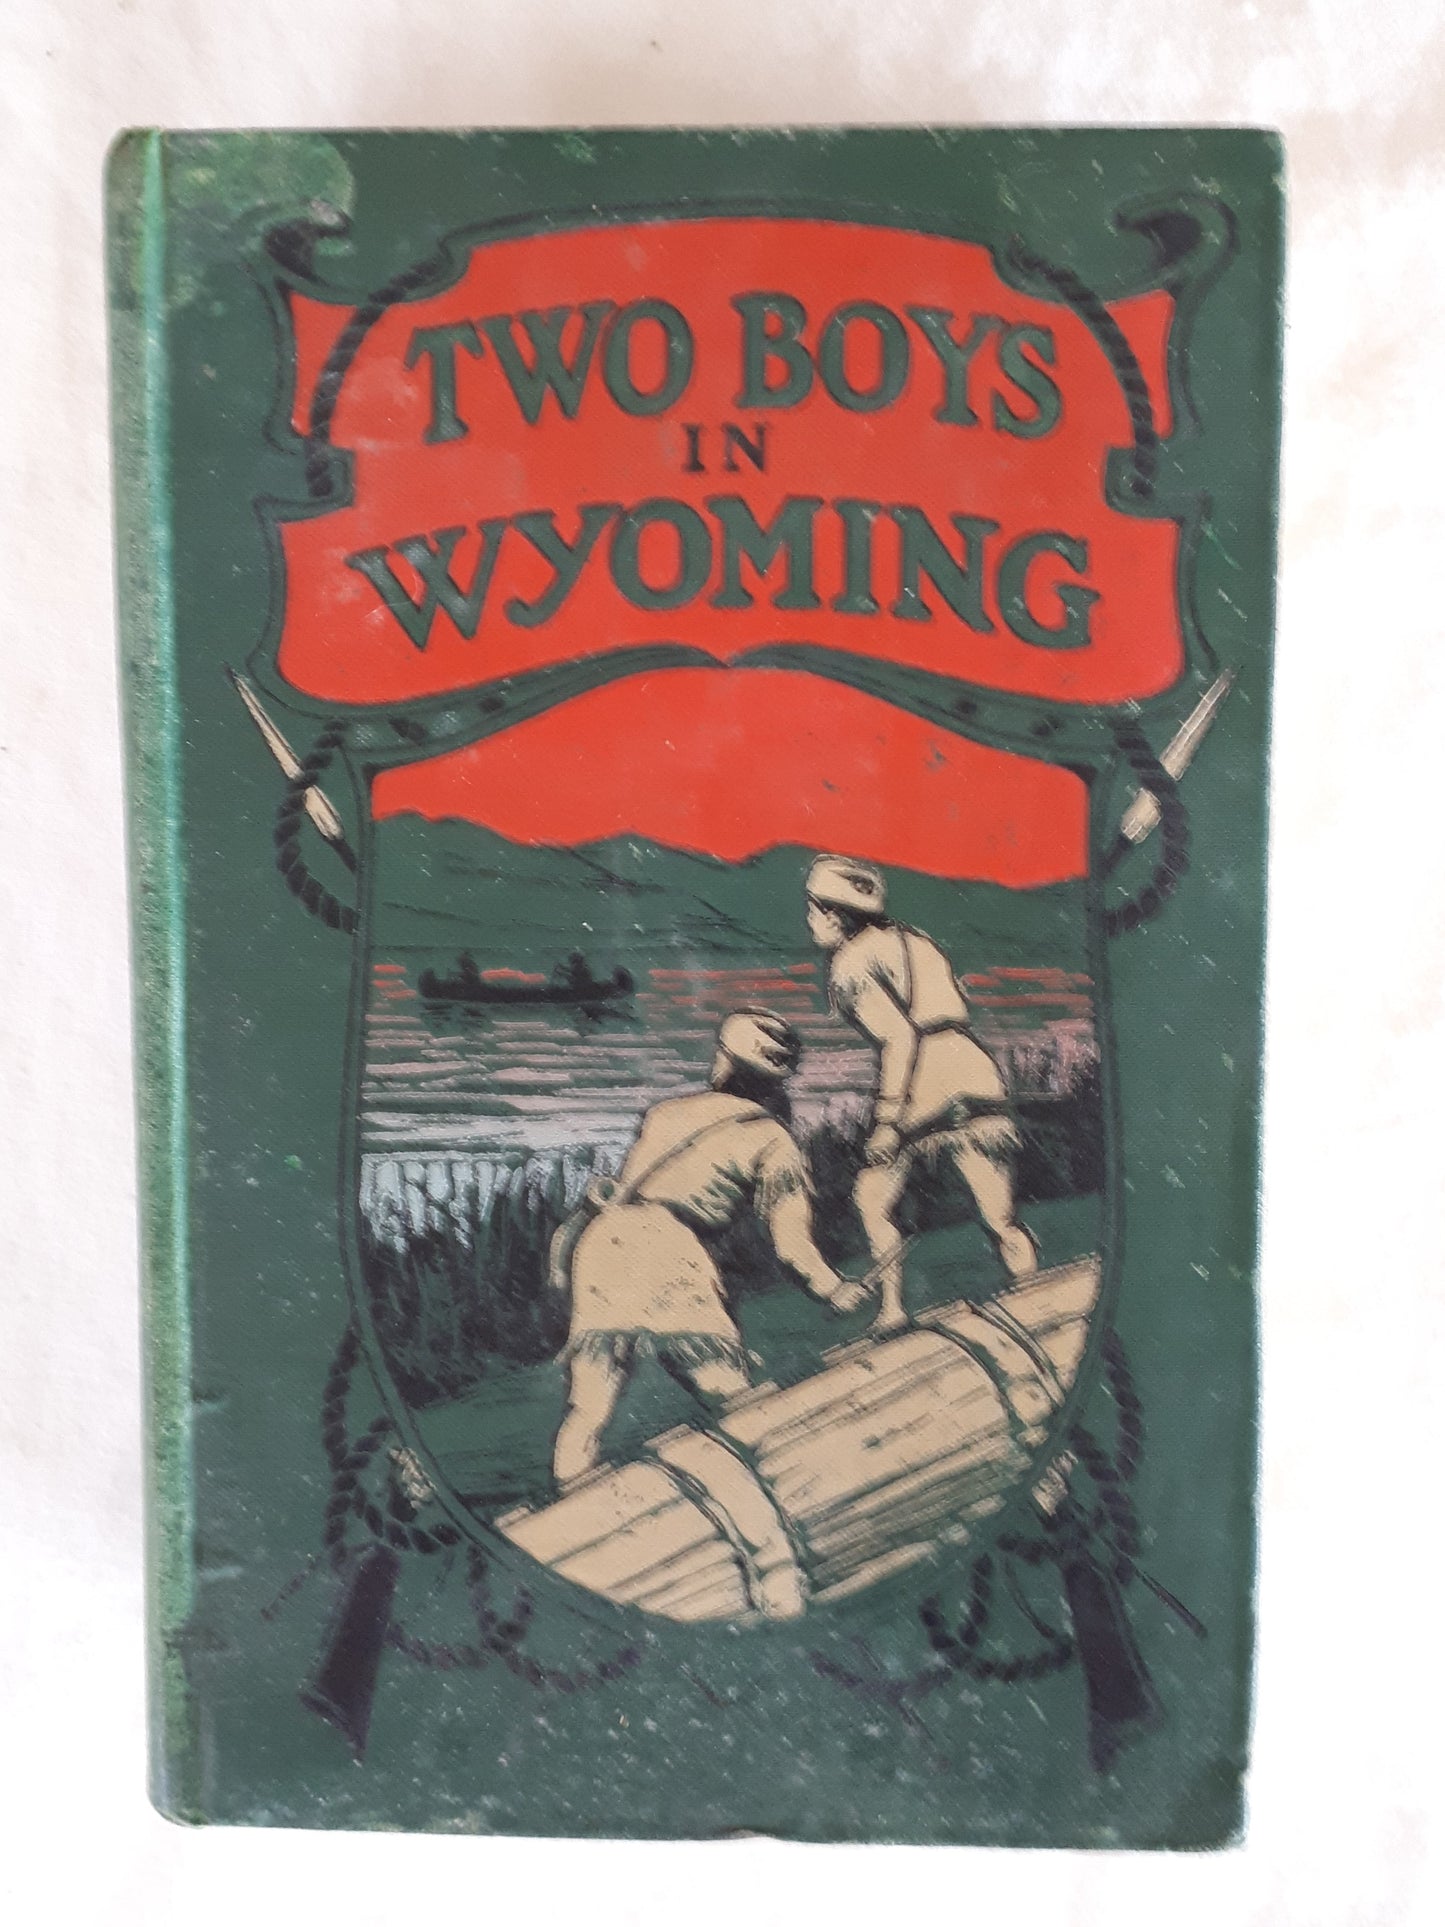 Two Boys in Wyoming by Edward S. Ellis